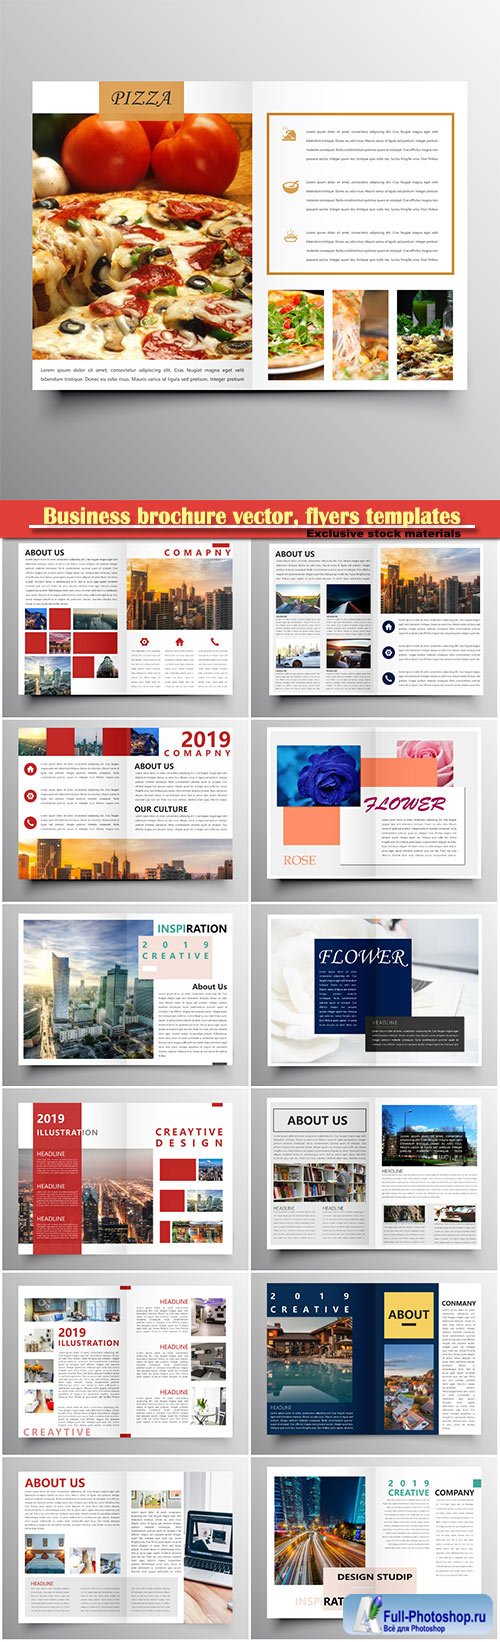 Business brochure vector, flyers templates # 43